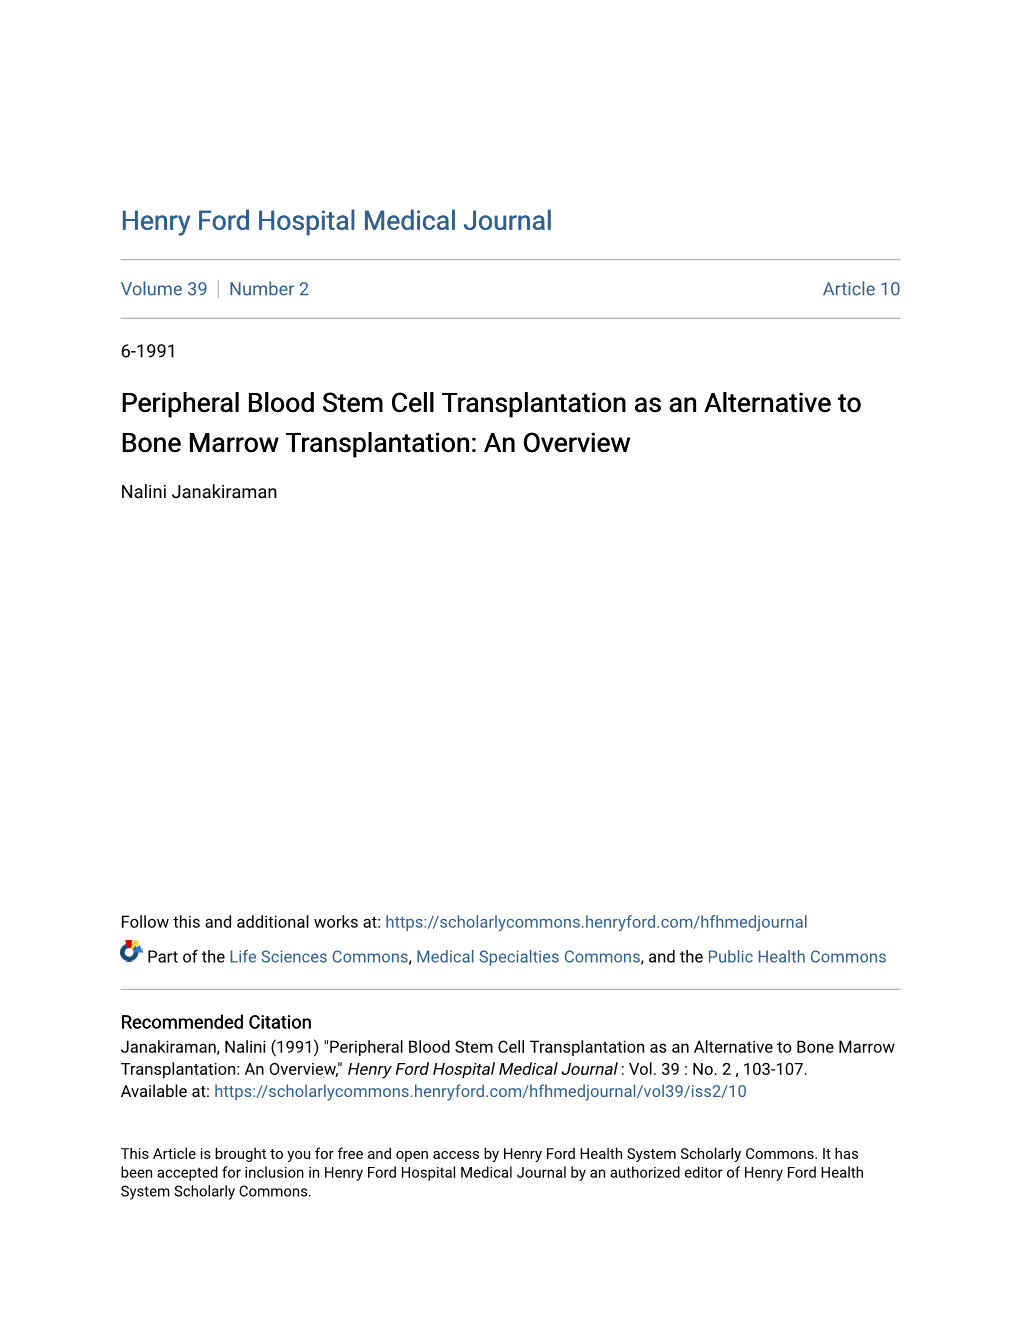 Peripheral Blood Stem Cell Transplantation As an Alternative to Bone Marrow Transplantation: an Overview